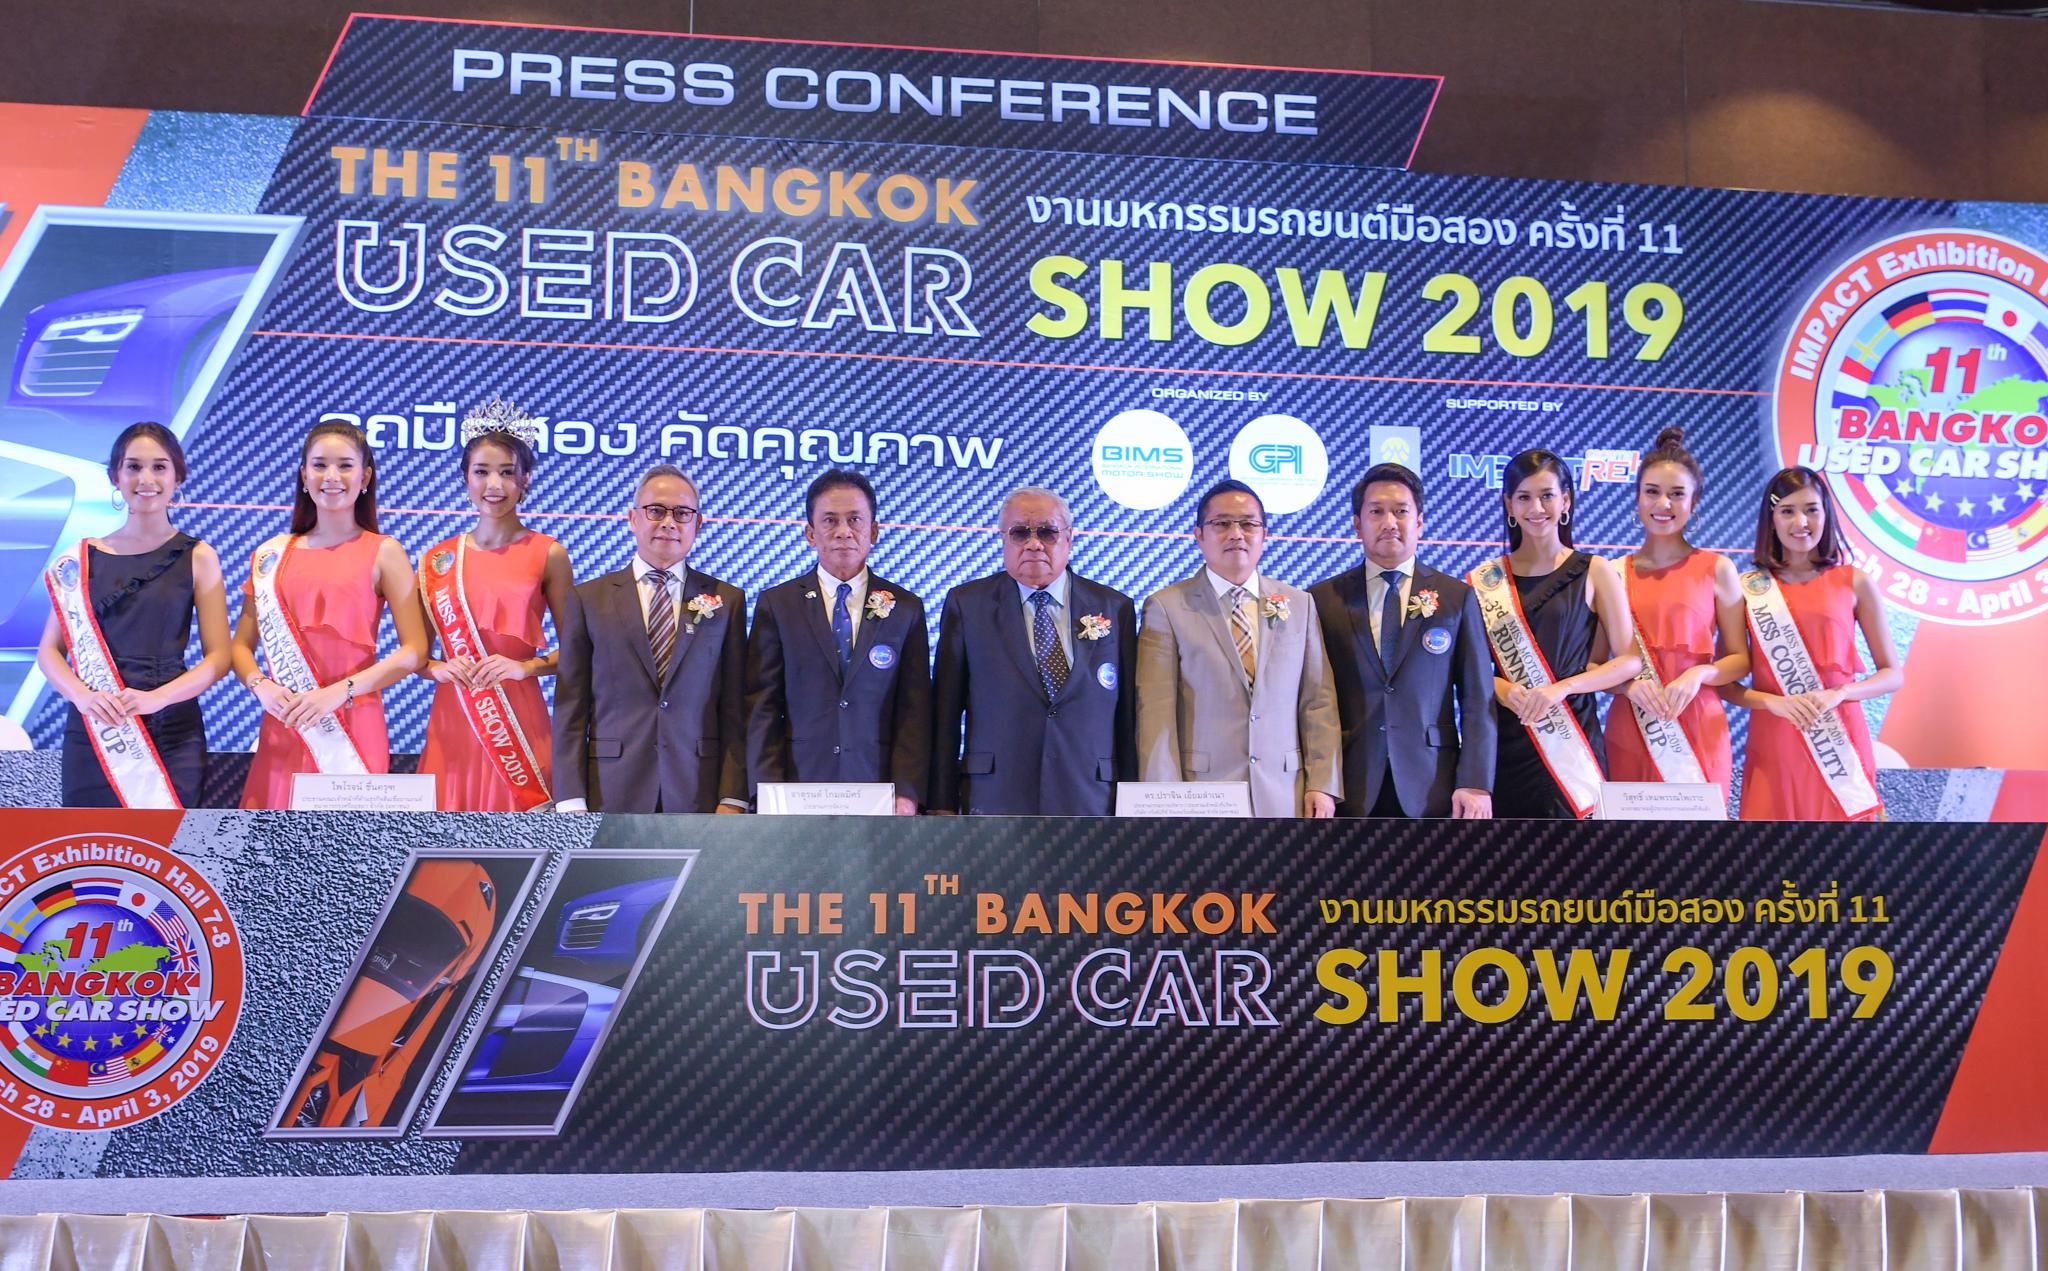 The 11th Bangkok Used Car Show 2019